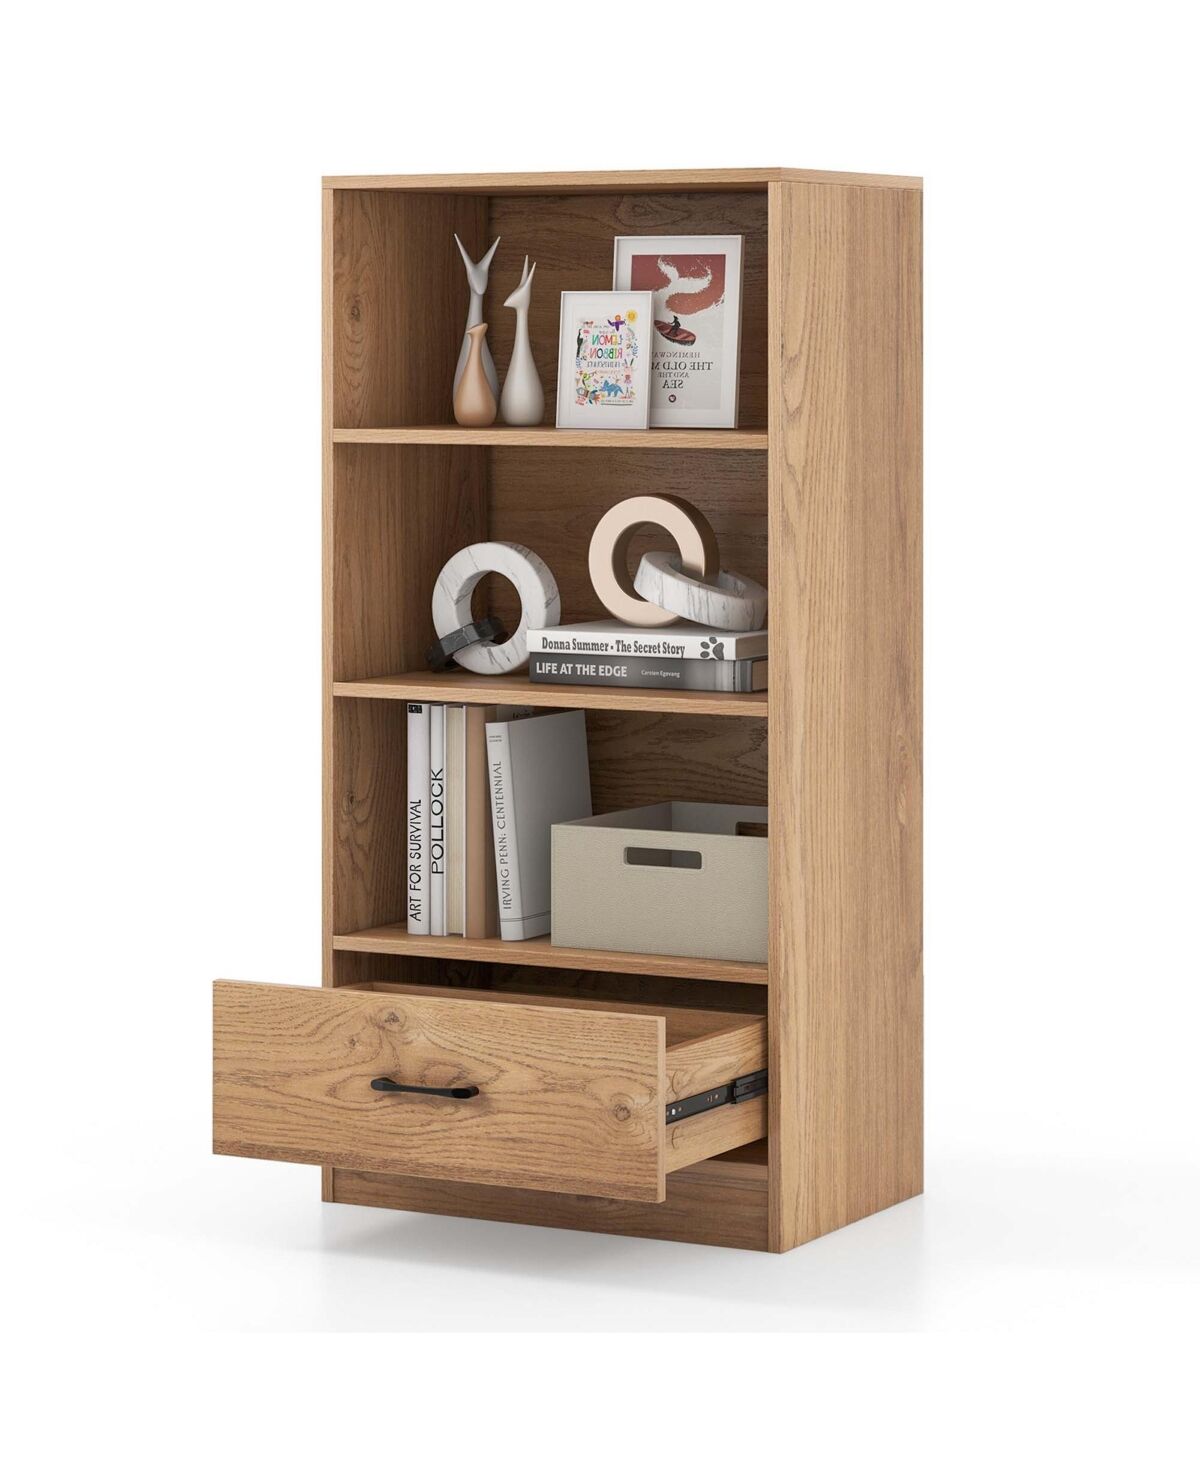 Costway 4-Tier Bookcase 48'' Display Bookshelf Storage Organizer with Shelves & Drawer - Natural